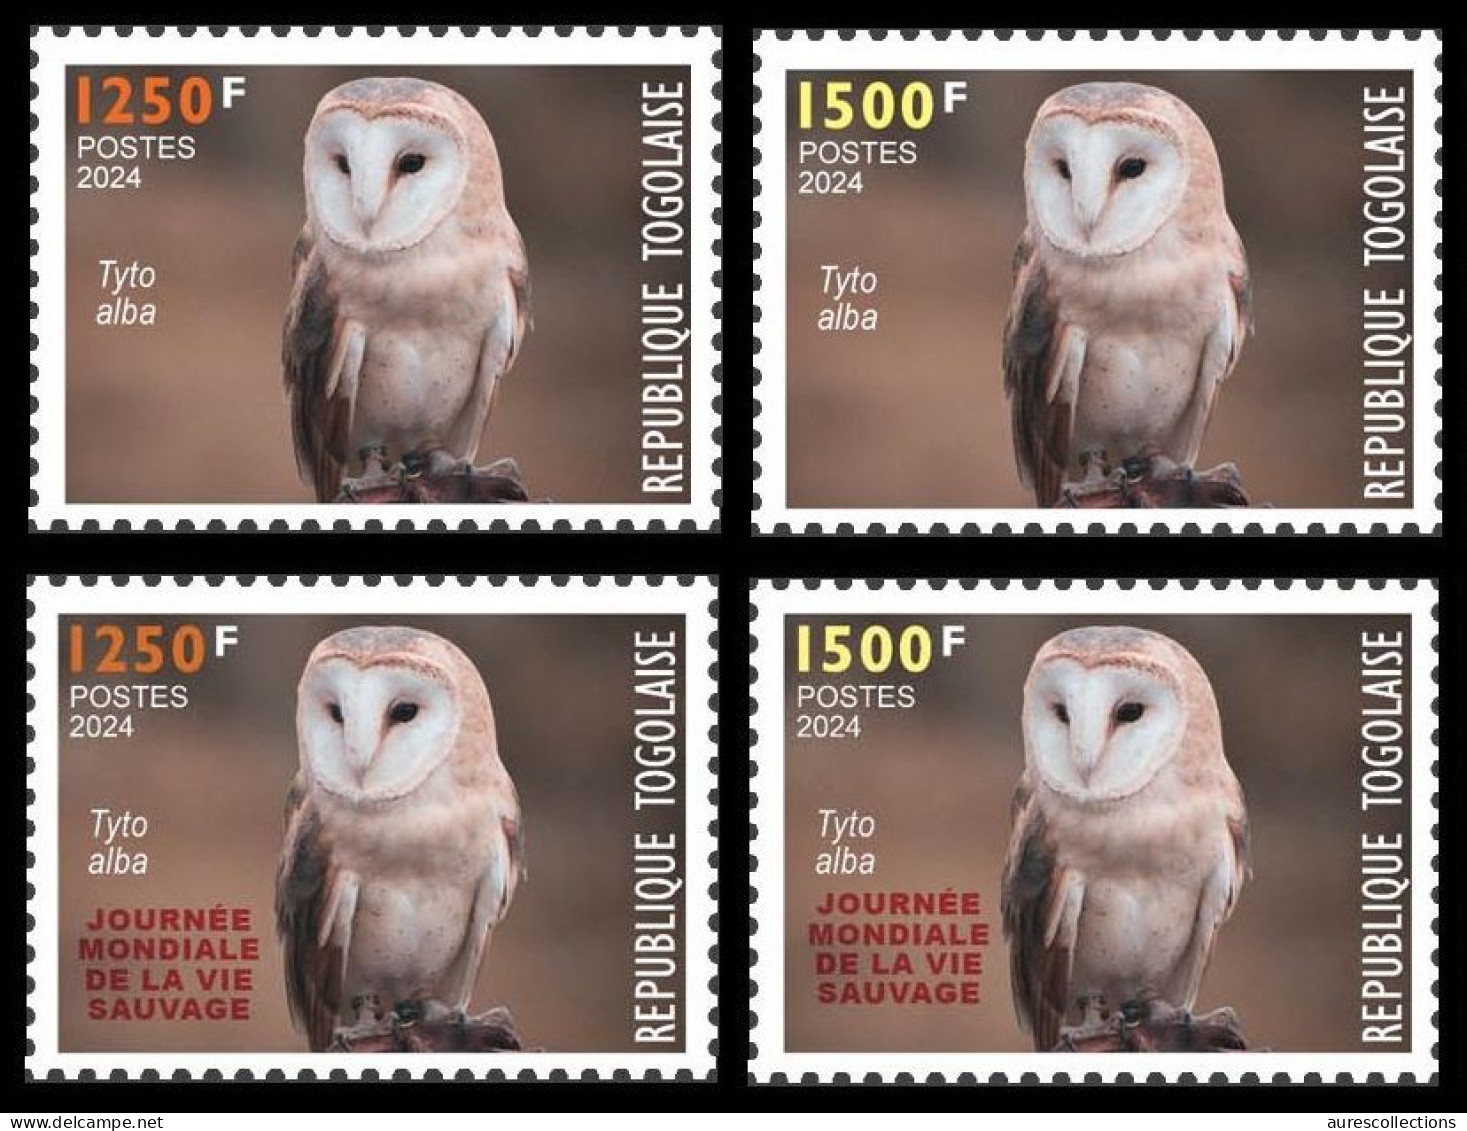 TOGO 2024 SET 4V - REGULAR & OVERPRINT - OWLS OWL HIBOU HIBOUX BIRDS OISEAUX - BIODIVERSITY BIODIVERSITE - MNH - Eulenvögel